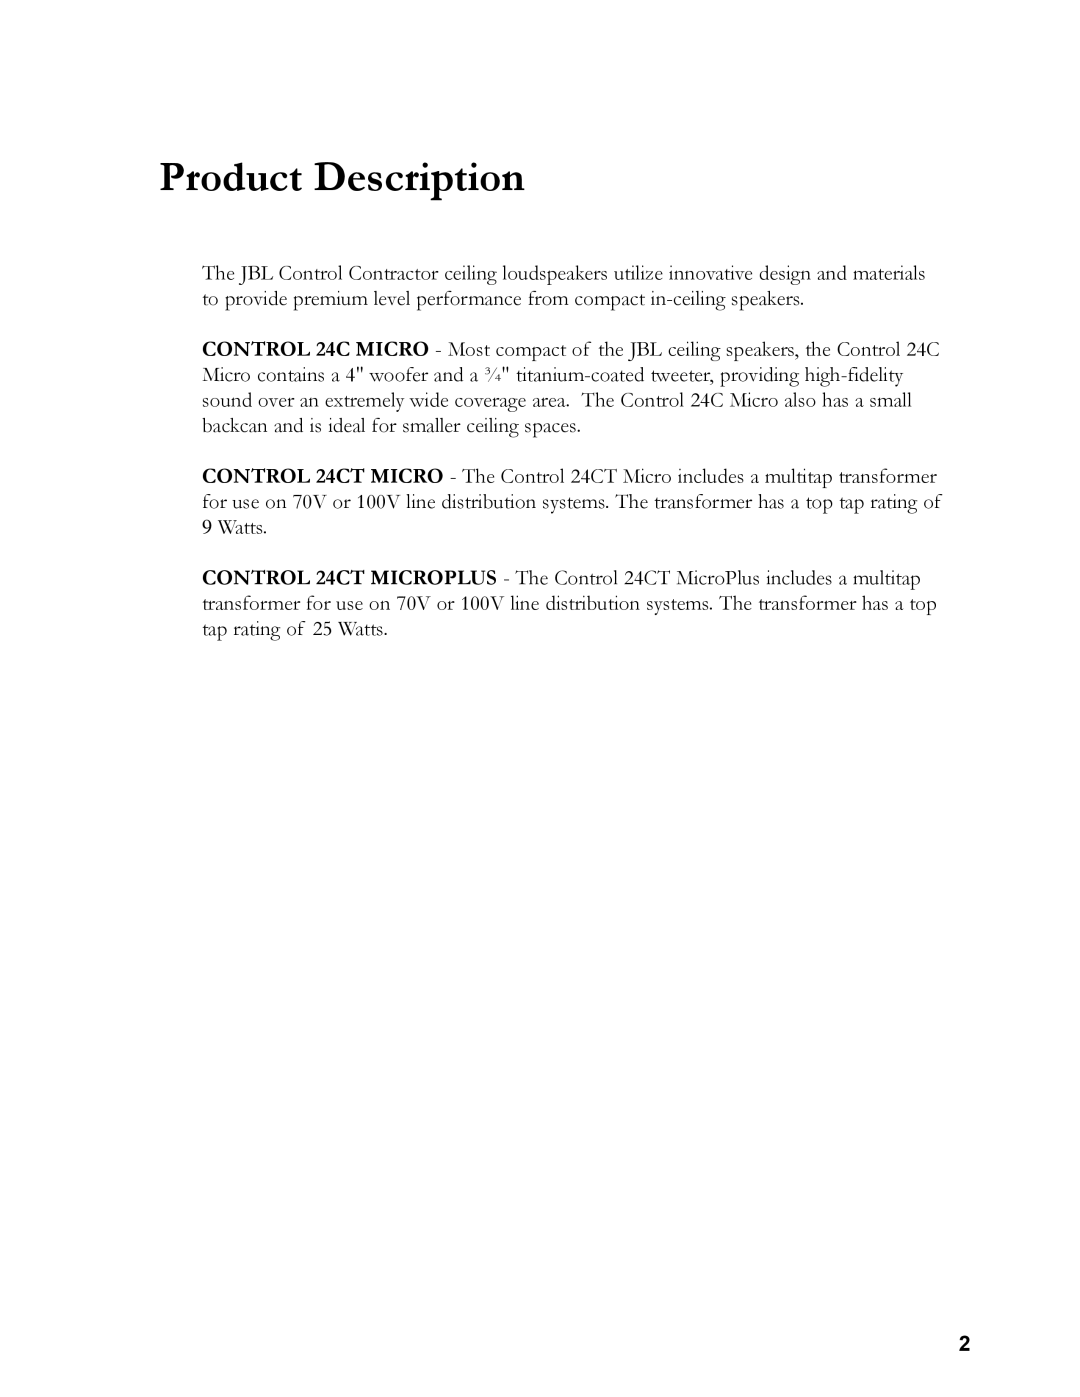 JBL 24C/CT owner manual Product Description 